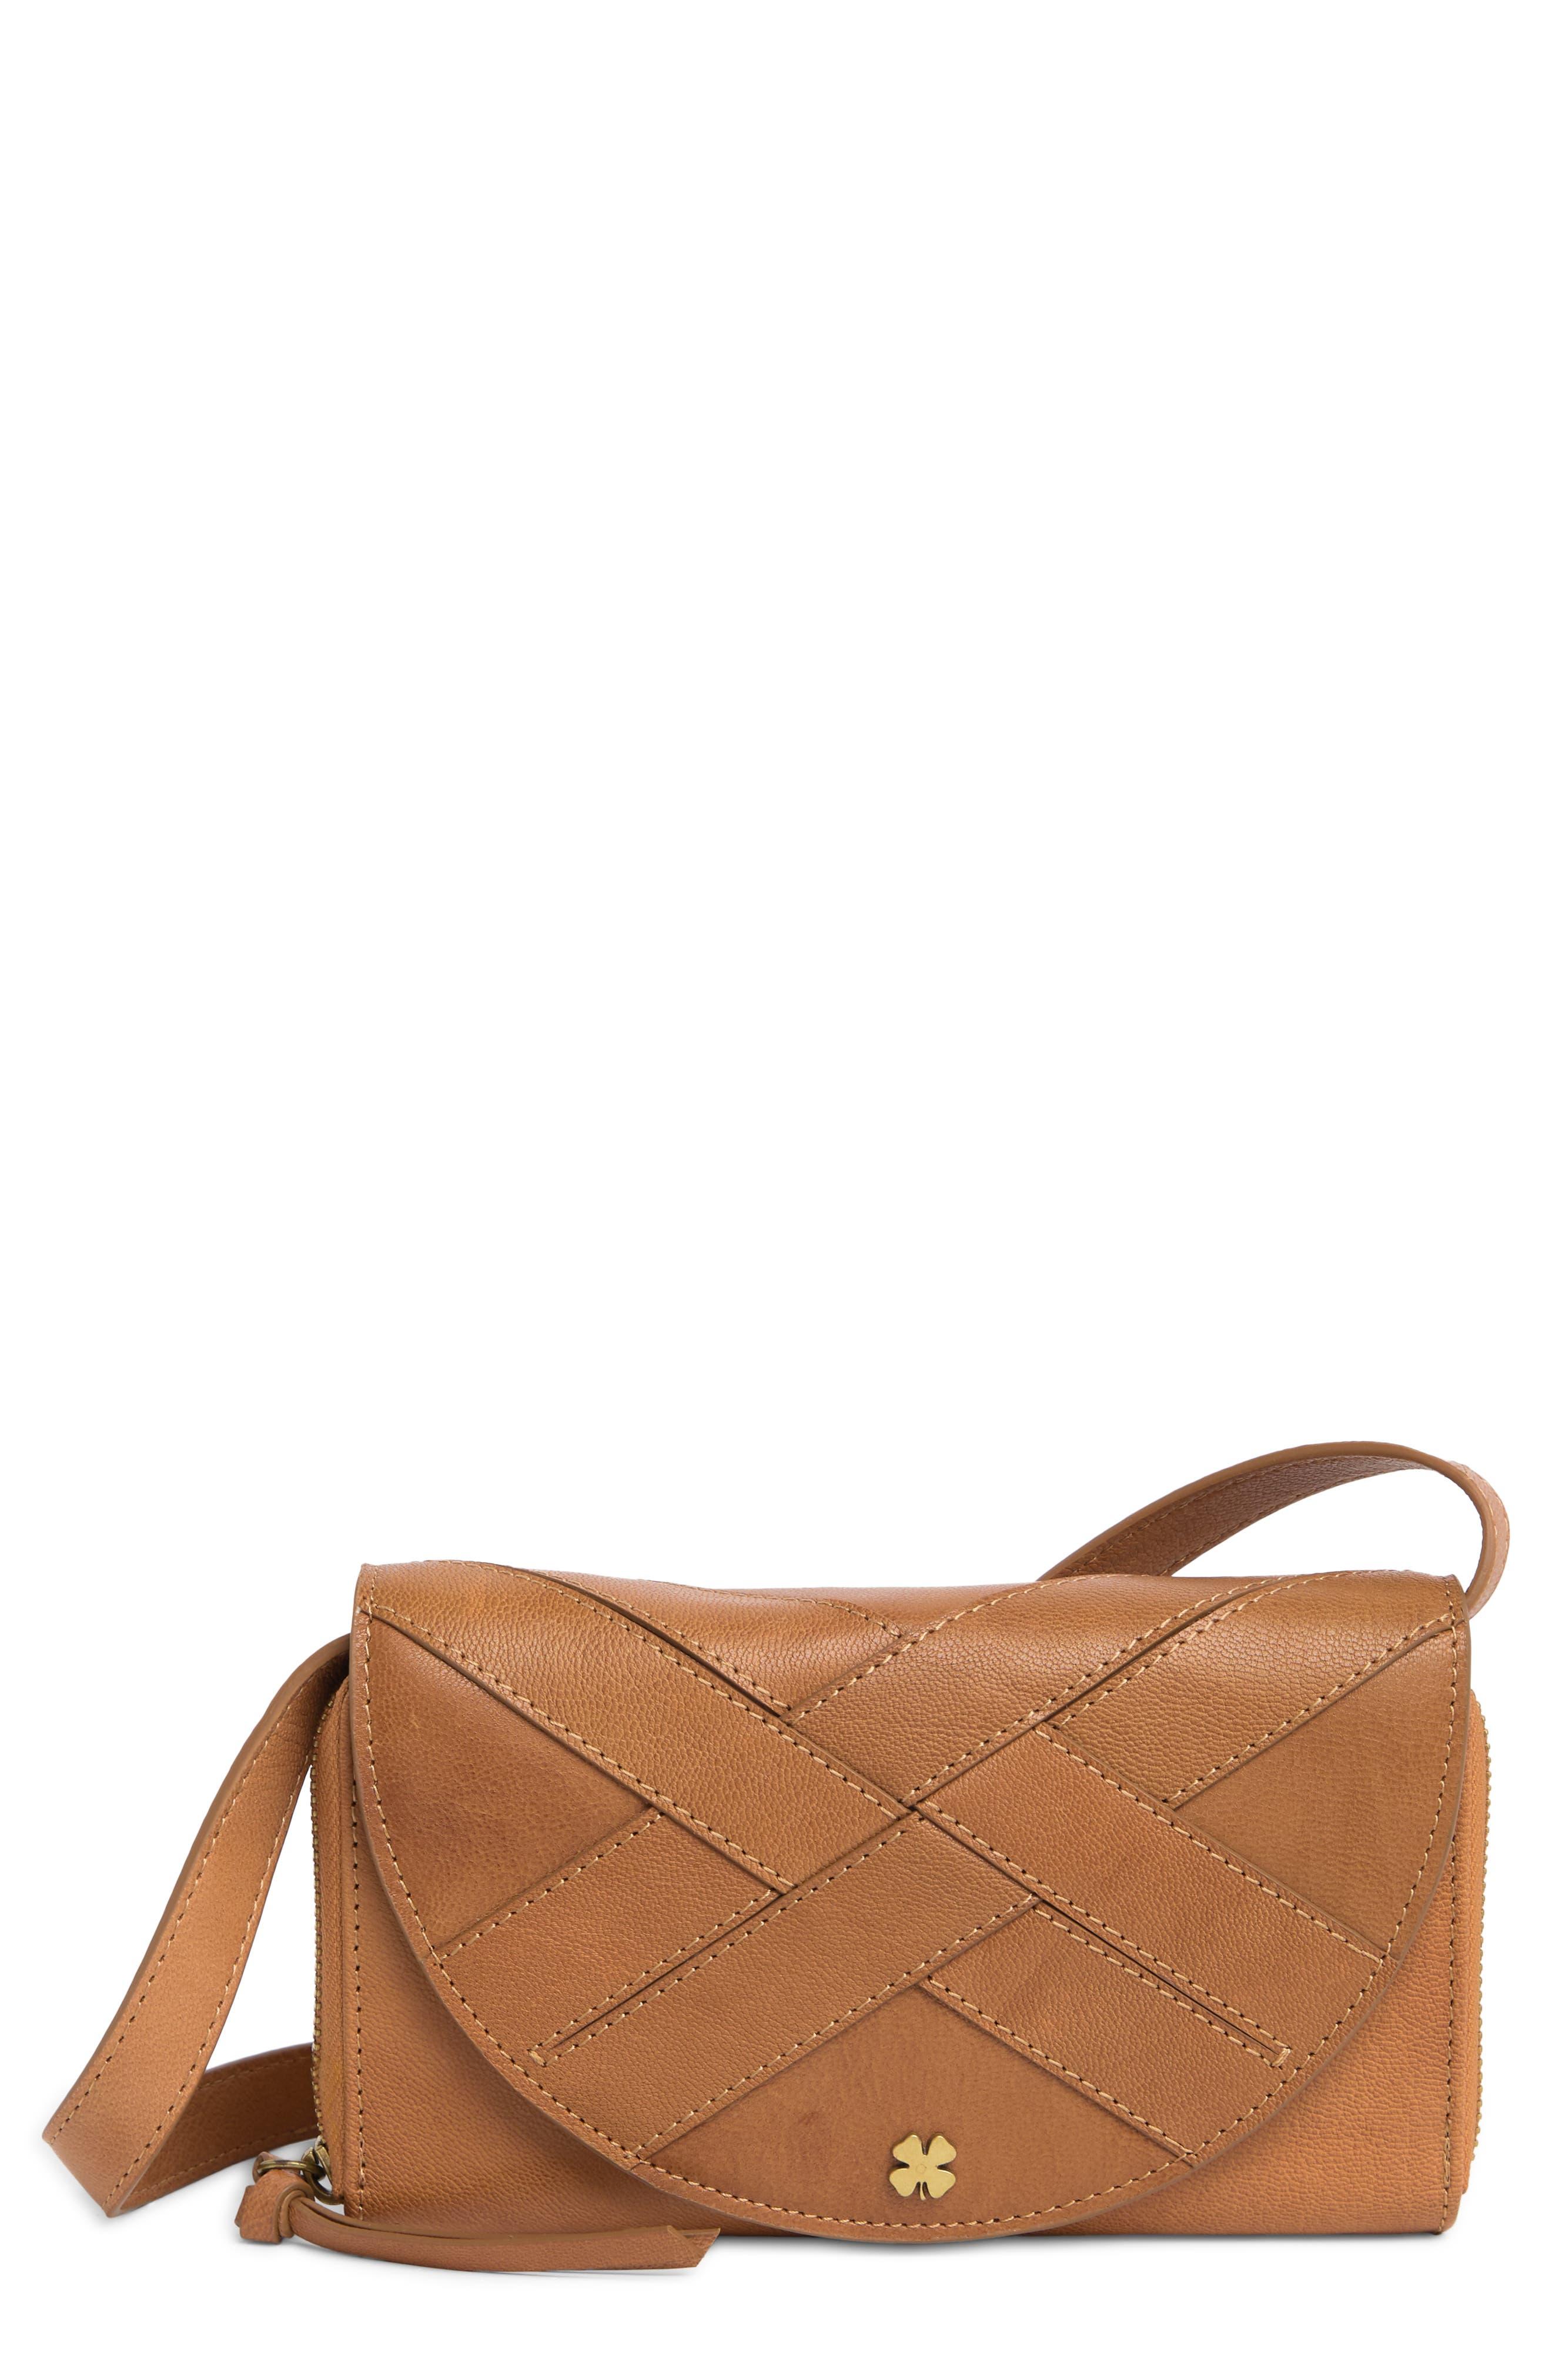 Lucky Brand Viva Leather Crossbody Bag in Brown